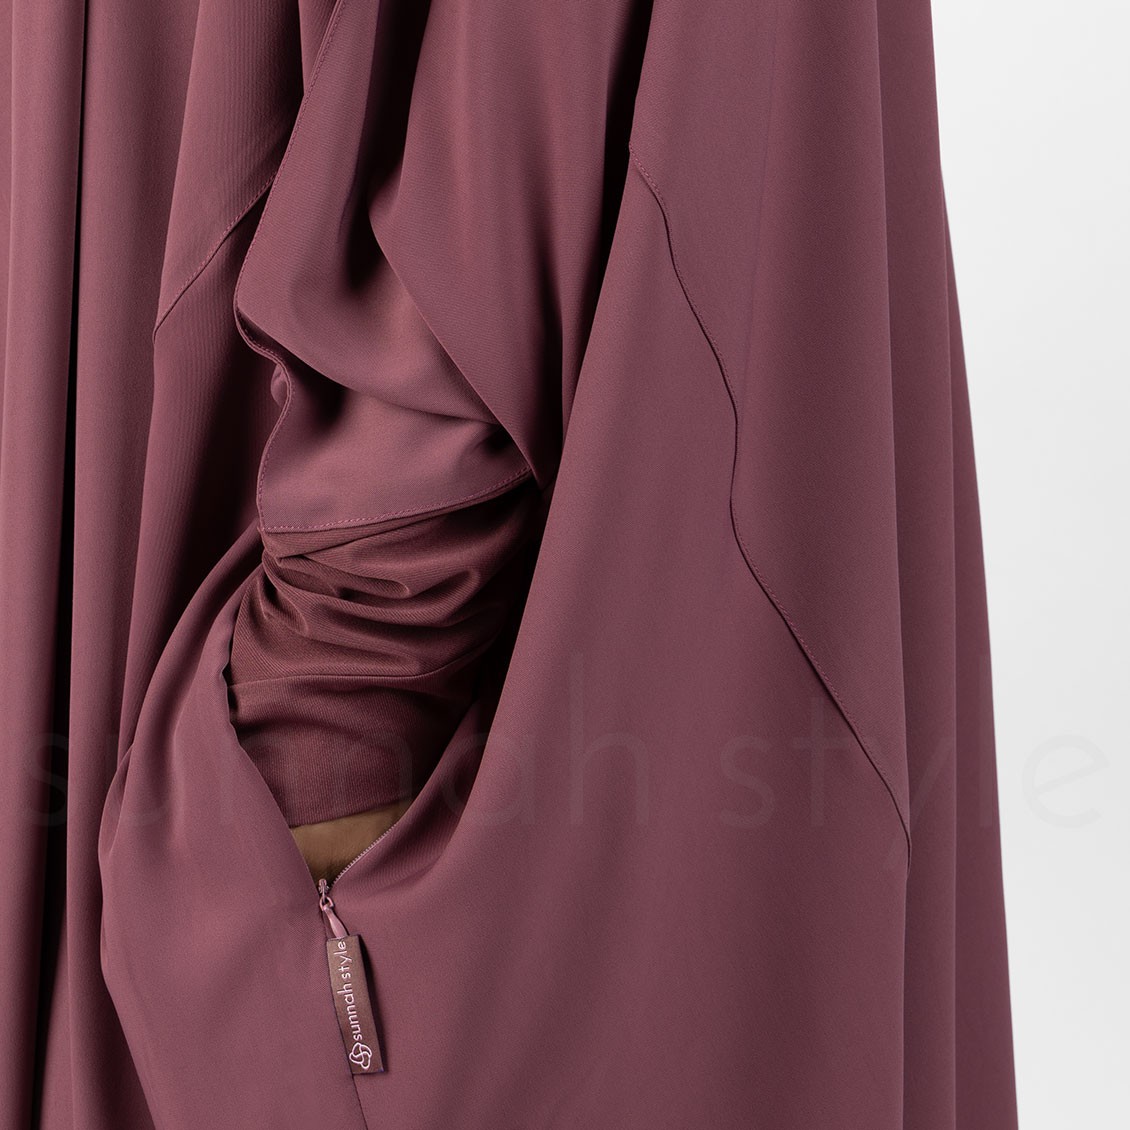 Sunnah Style Essentials Full Length Jilbab Rosewood